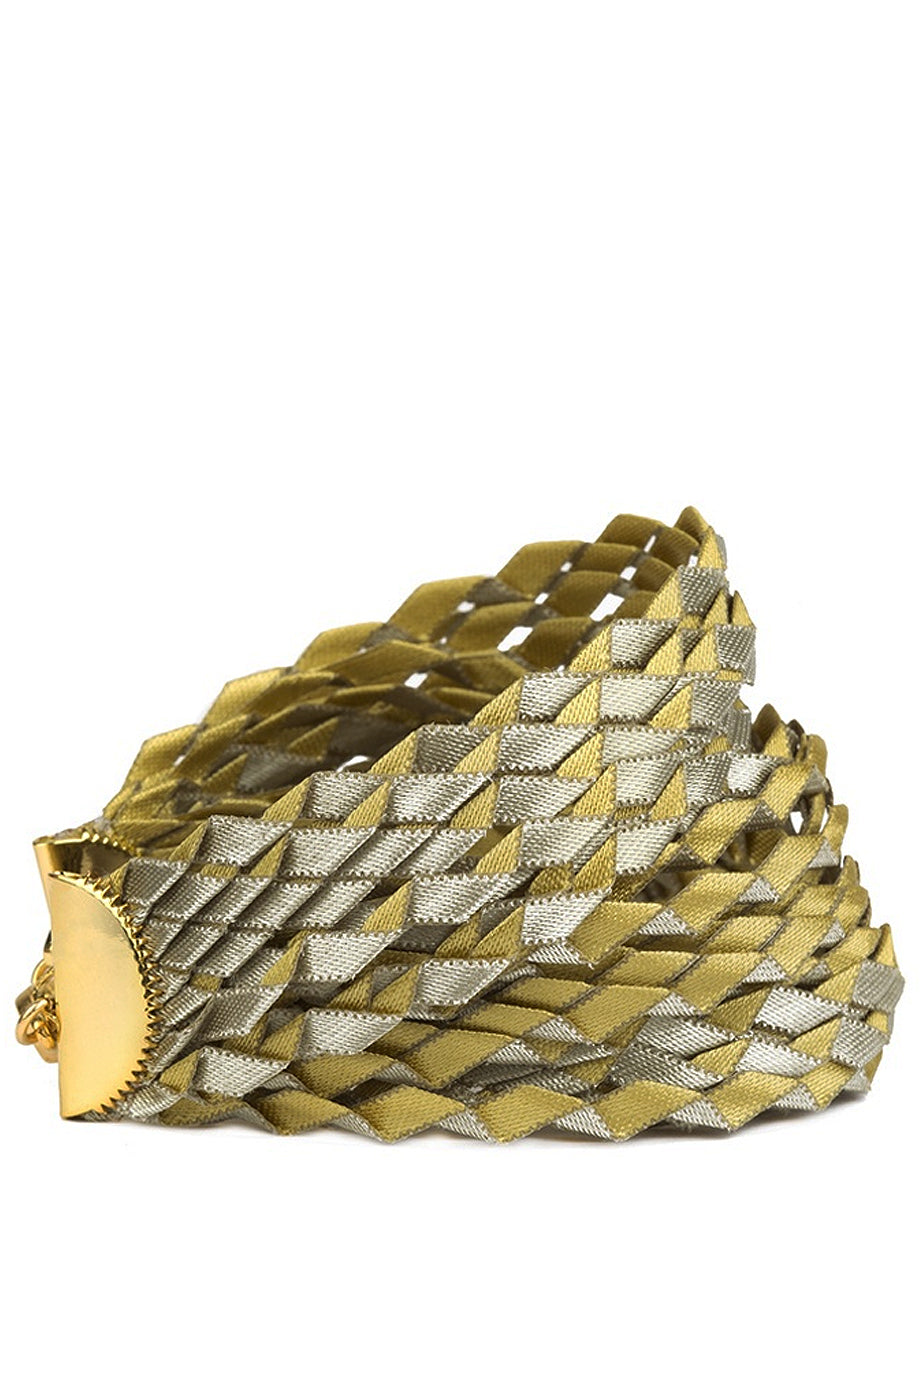 Zig Zag Χρυσό Ασημί Μεταξωτό Βραχιόλι | Κοσμήματα - Αλεξάνδρα Τσουκαλά